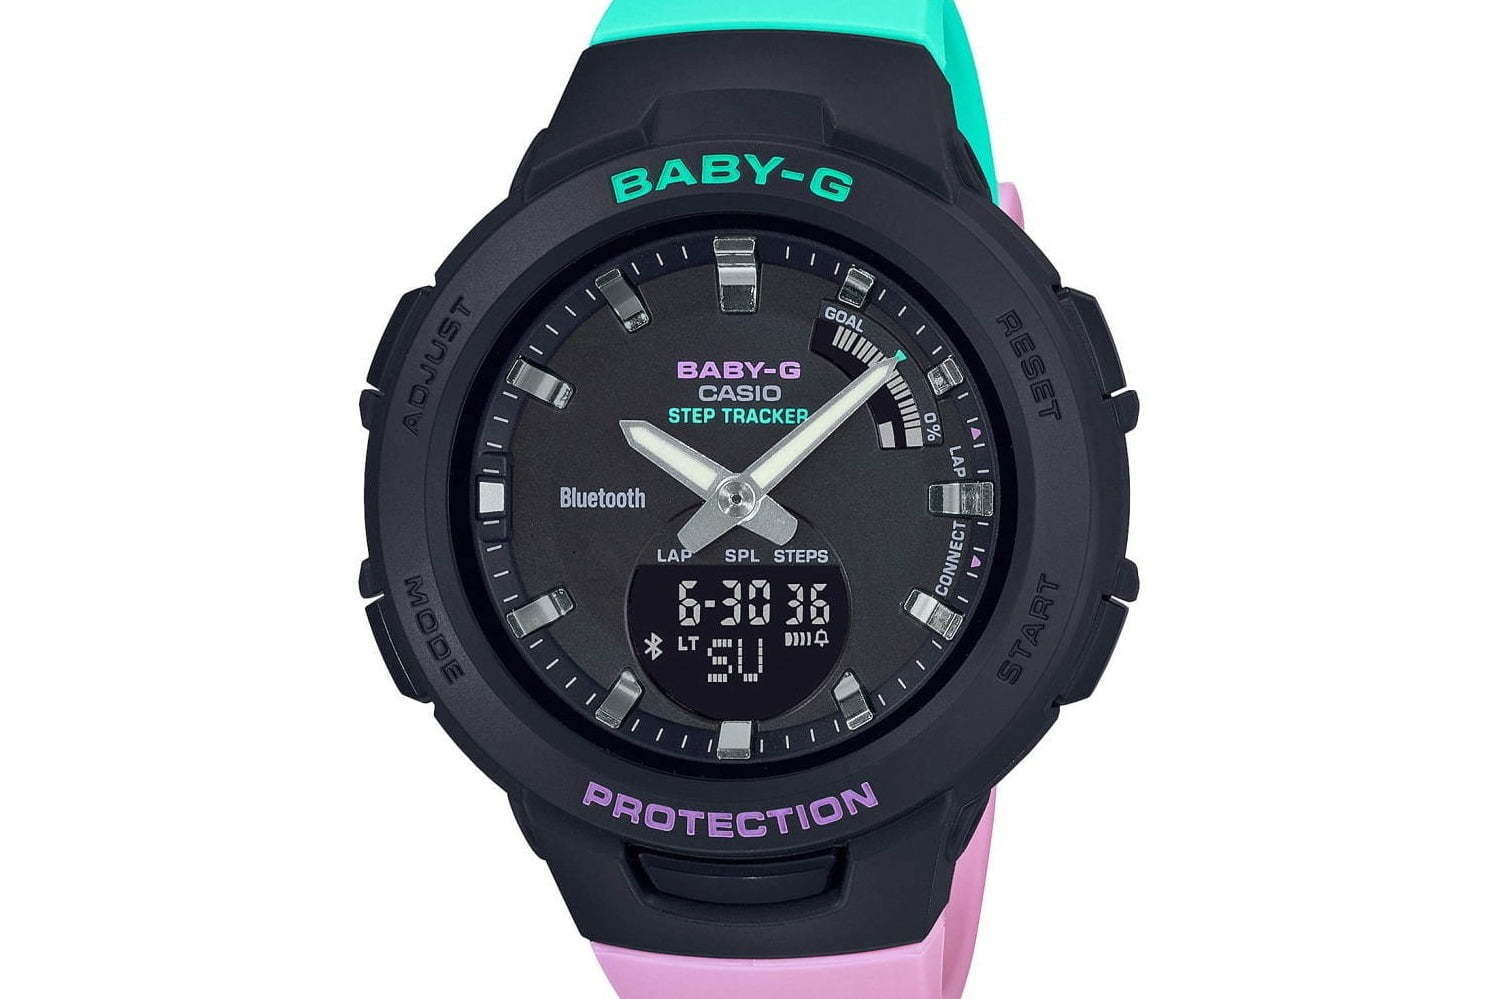 BABY-G“スポーツシーン”に特化した新作腕時計、スマホ連携で歩数